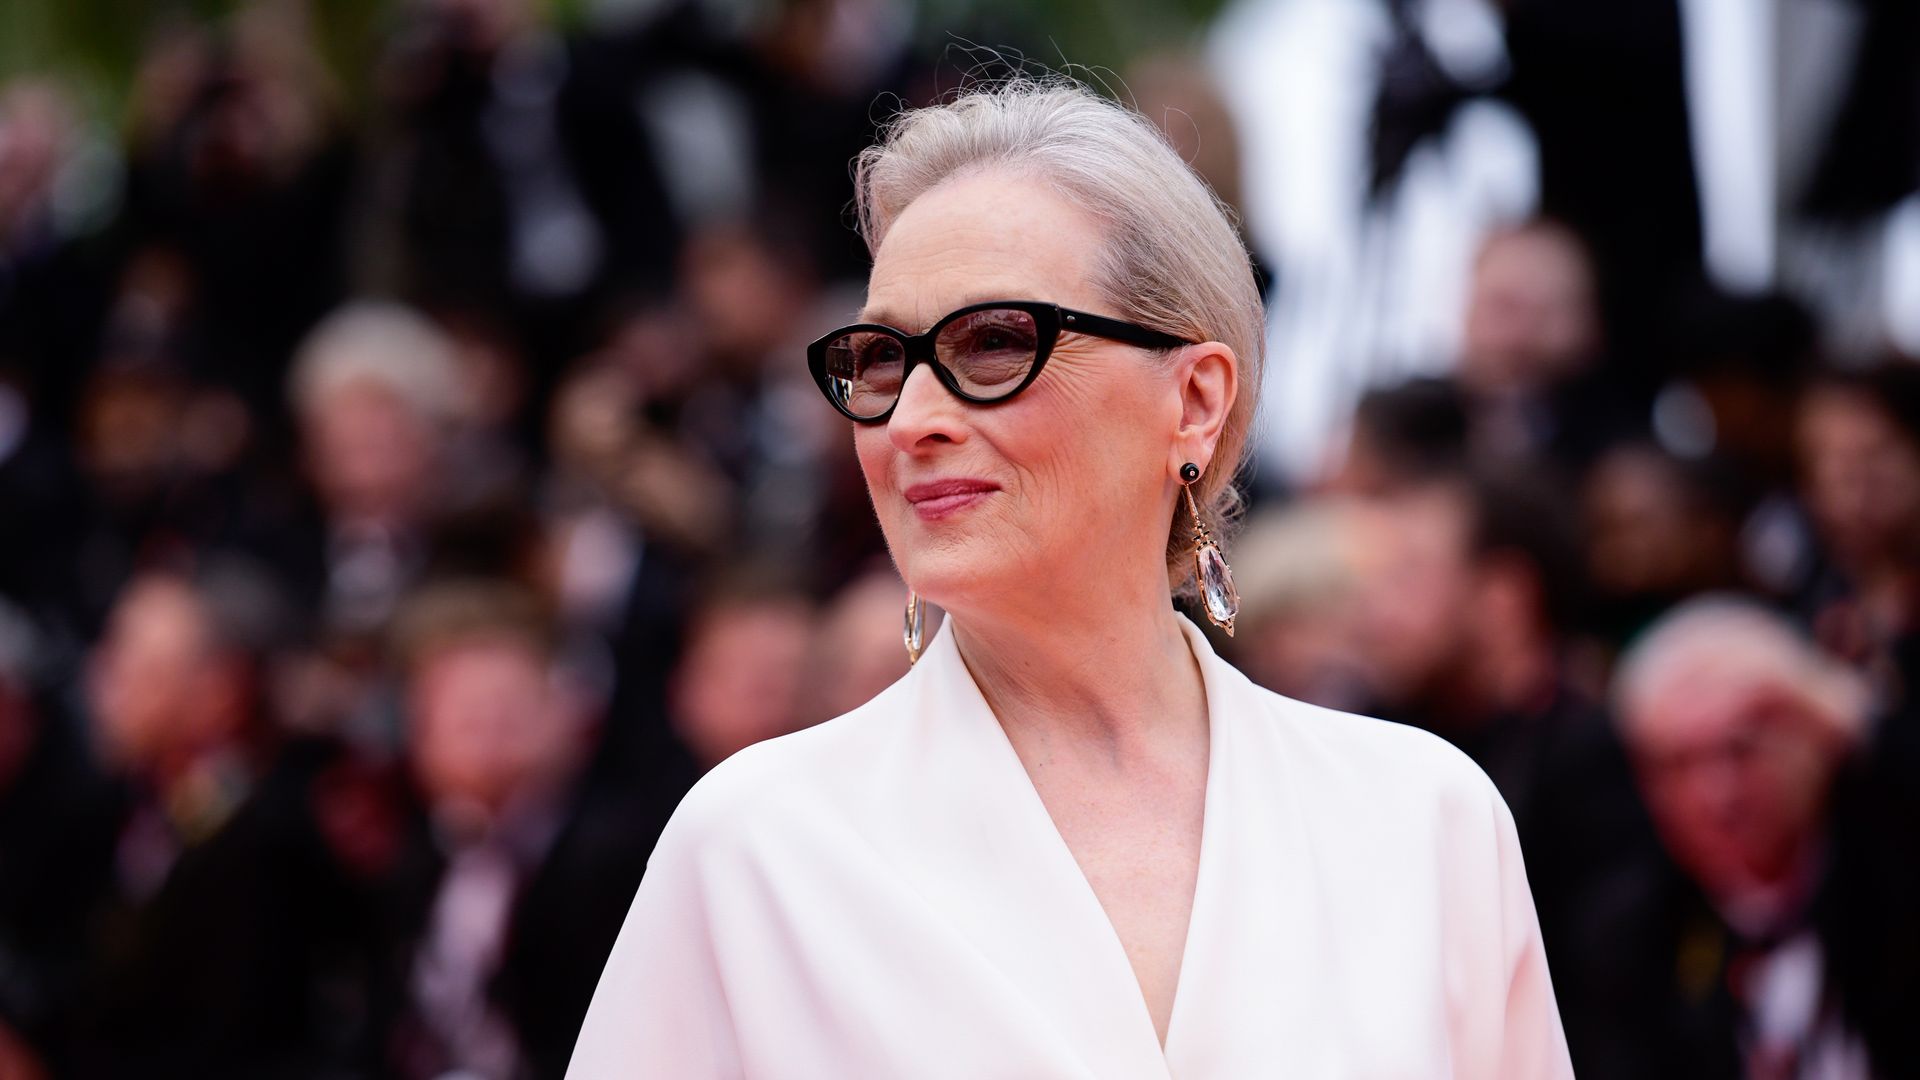 Meryl Streep confirms her icon status in ethereal white gown to receive prestigious award